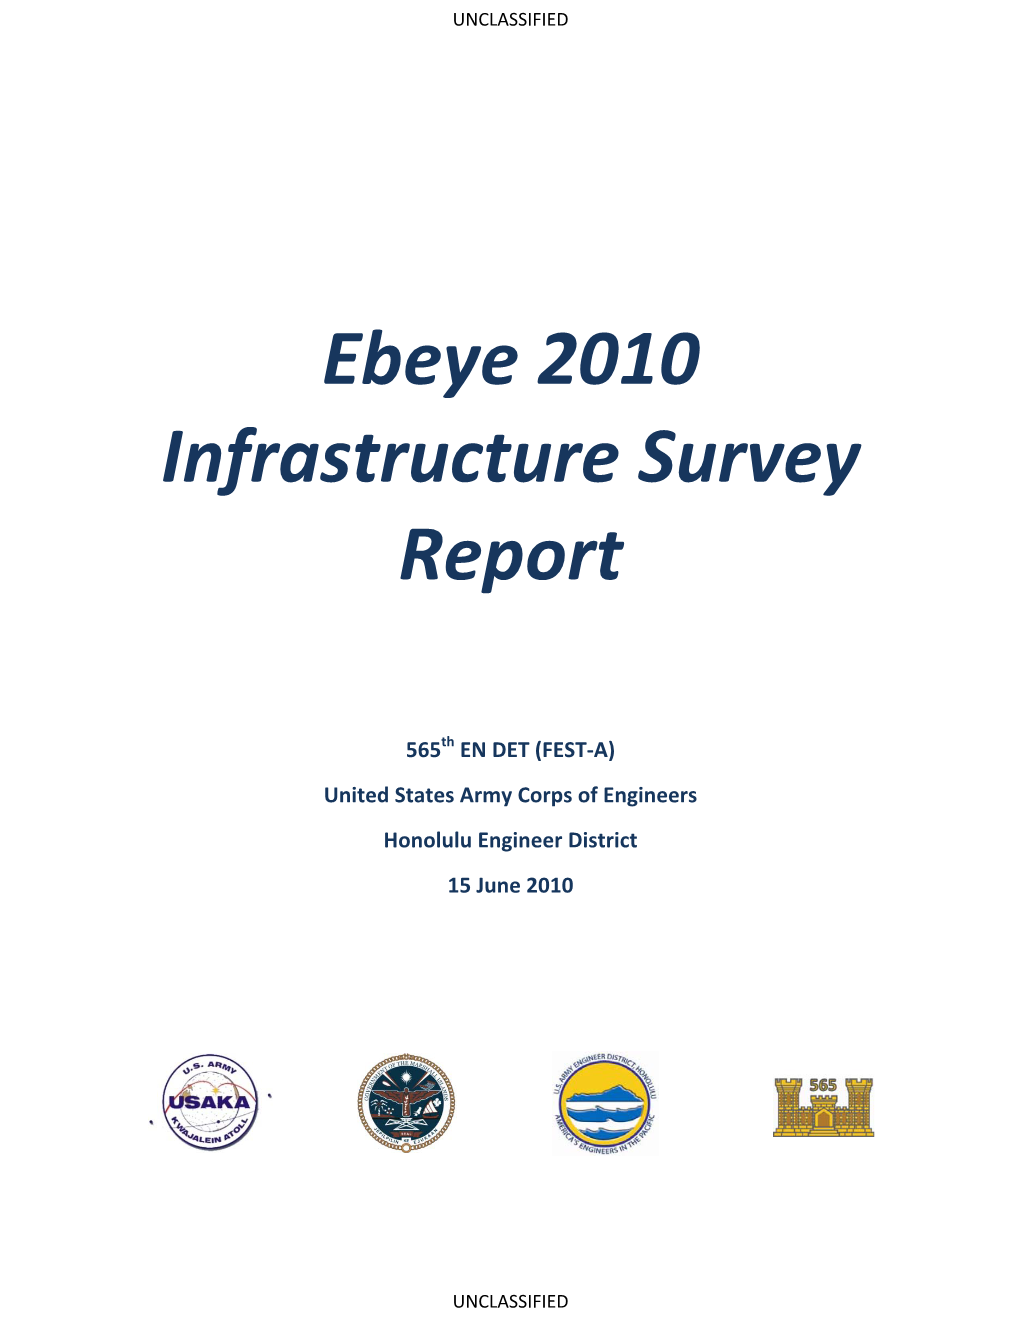 Ebeye 2010 Infrastructure Survey Report